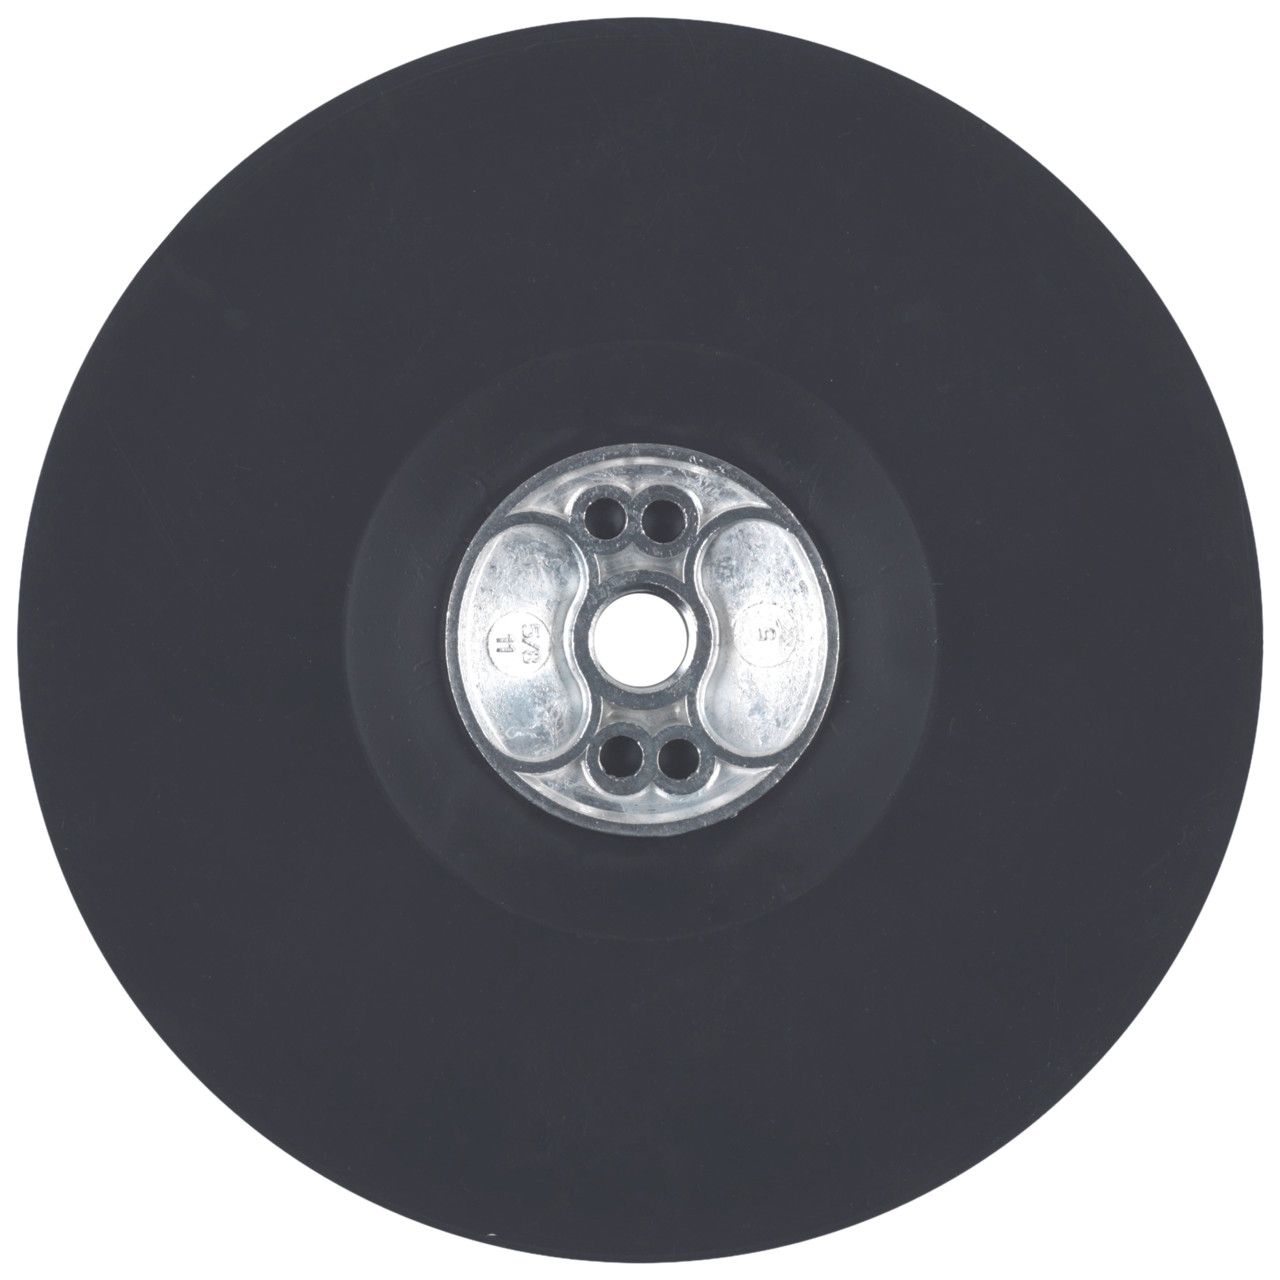 Tyrolit Accesorios para discos de fibra 180 x 22 #PAD FIBER 180x22 M14 B HARD